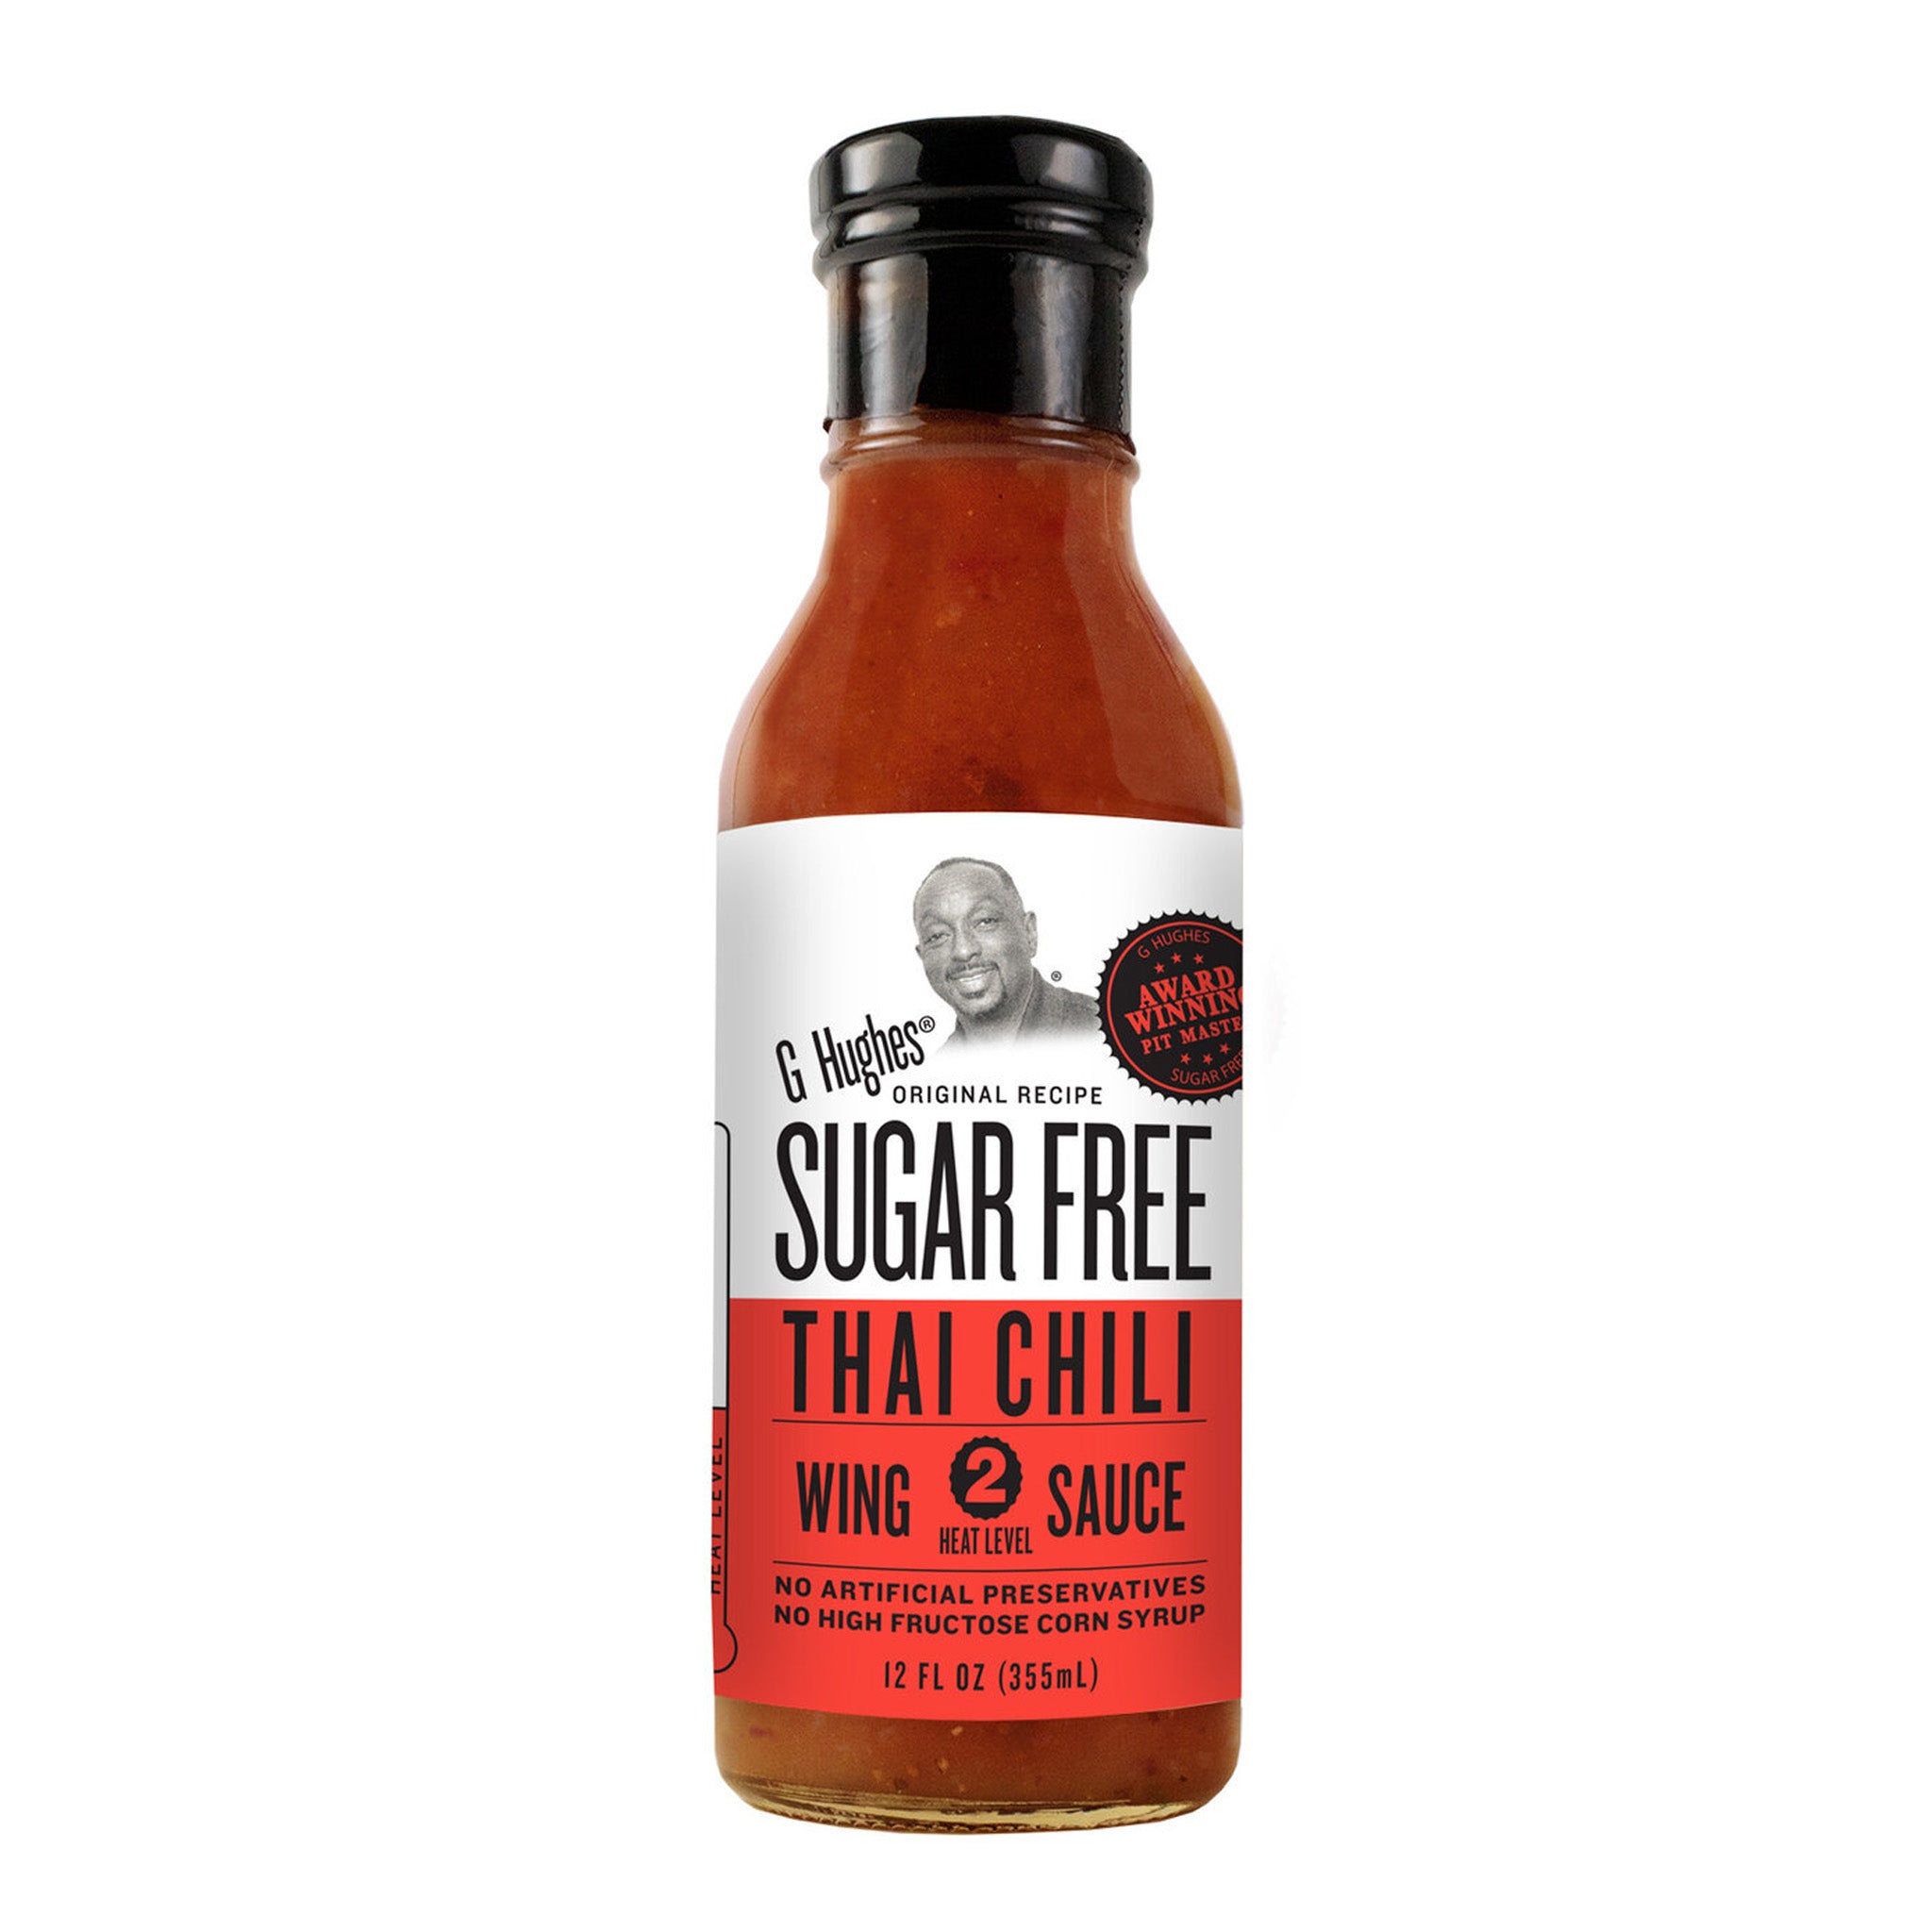 G Hughes Sugar Free Thai Chili Wing Sauce (355ml)